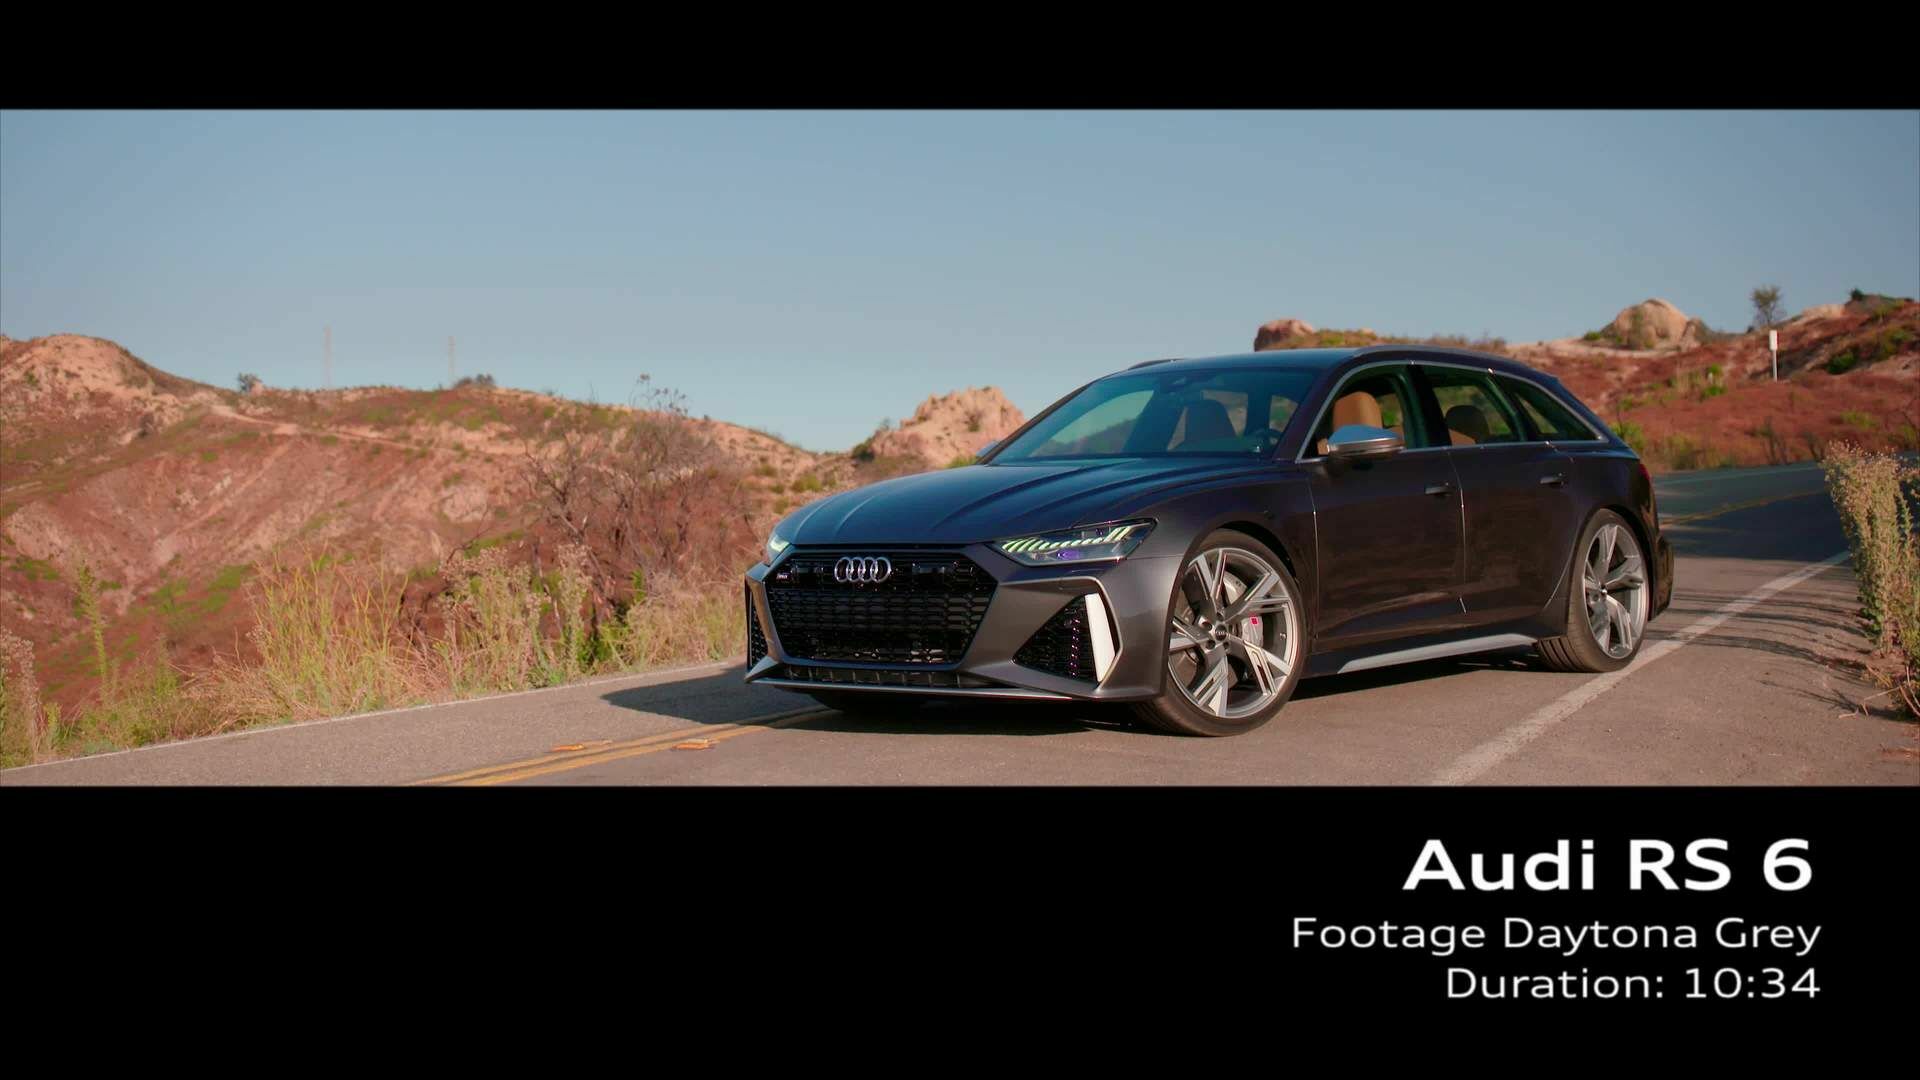 Audi RS 6 on location Daytona Grey (Footage)